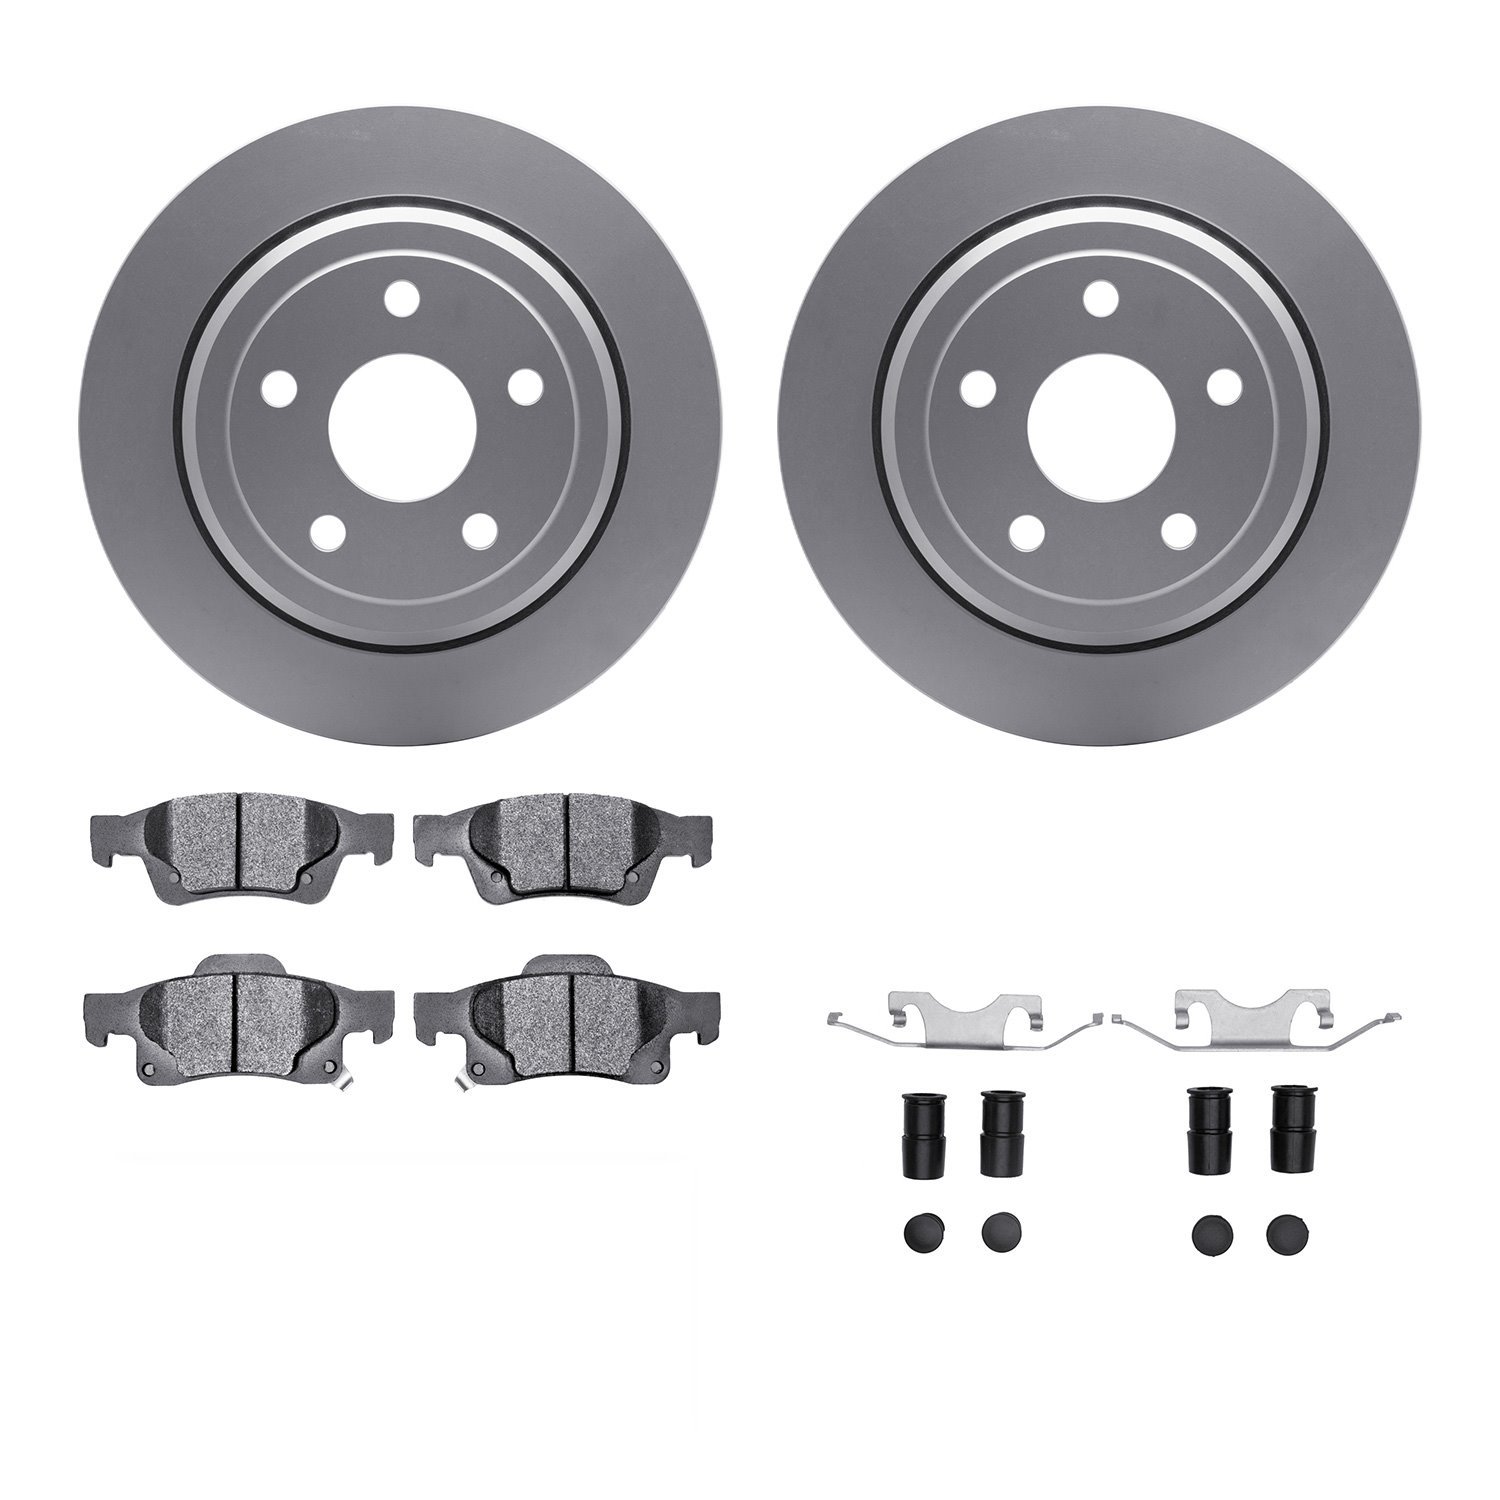 4312-42024 Geospec Brake Rotors with 3000-Series Ceramic Brake Pads & Hardware, Fits Select Mopar, Position: Rear